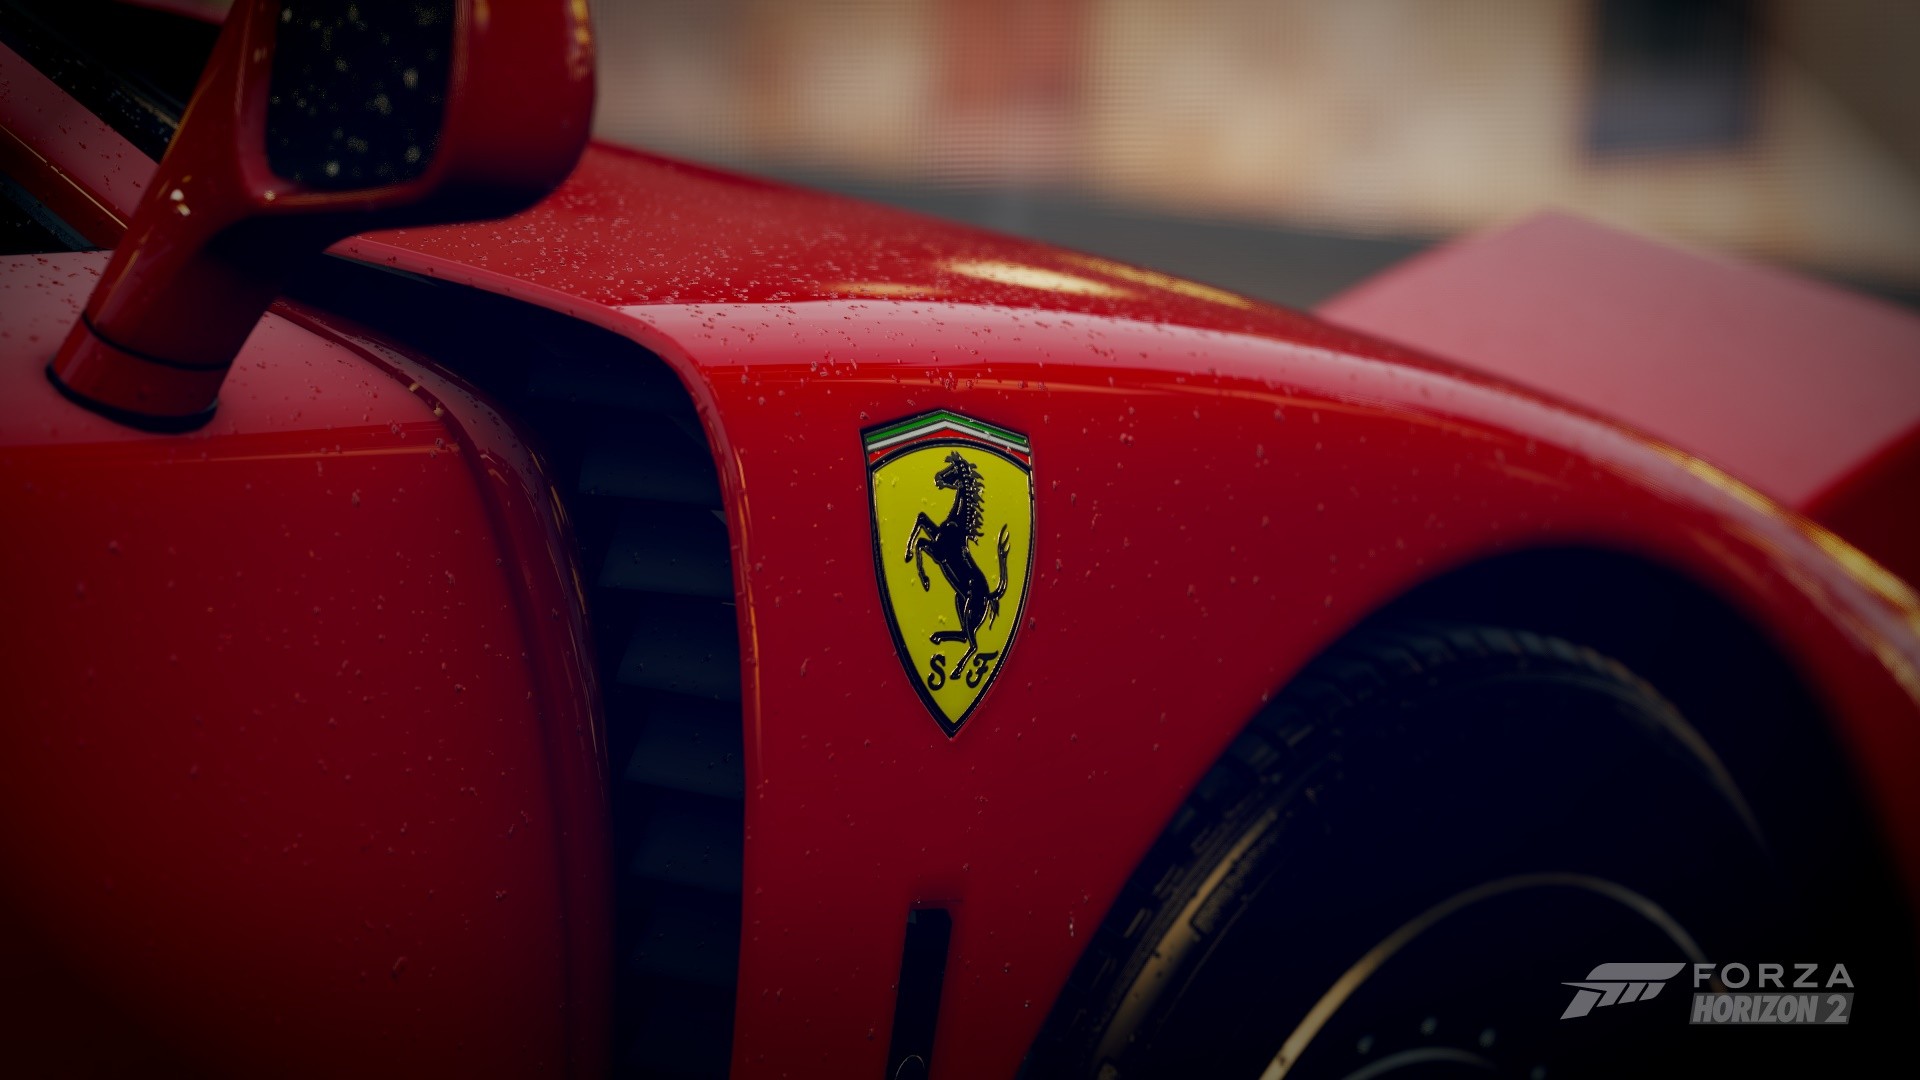 Ferrari, Car, Forza Horizon 2, Ferrari F40, F40, Red Cars ...